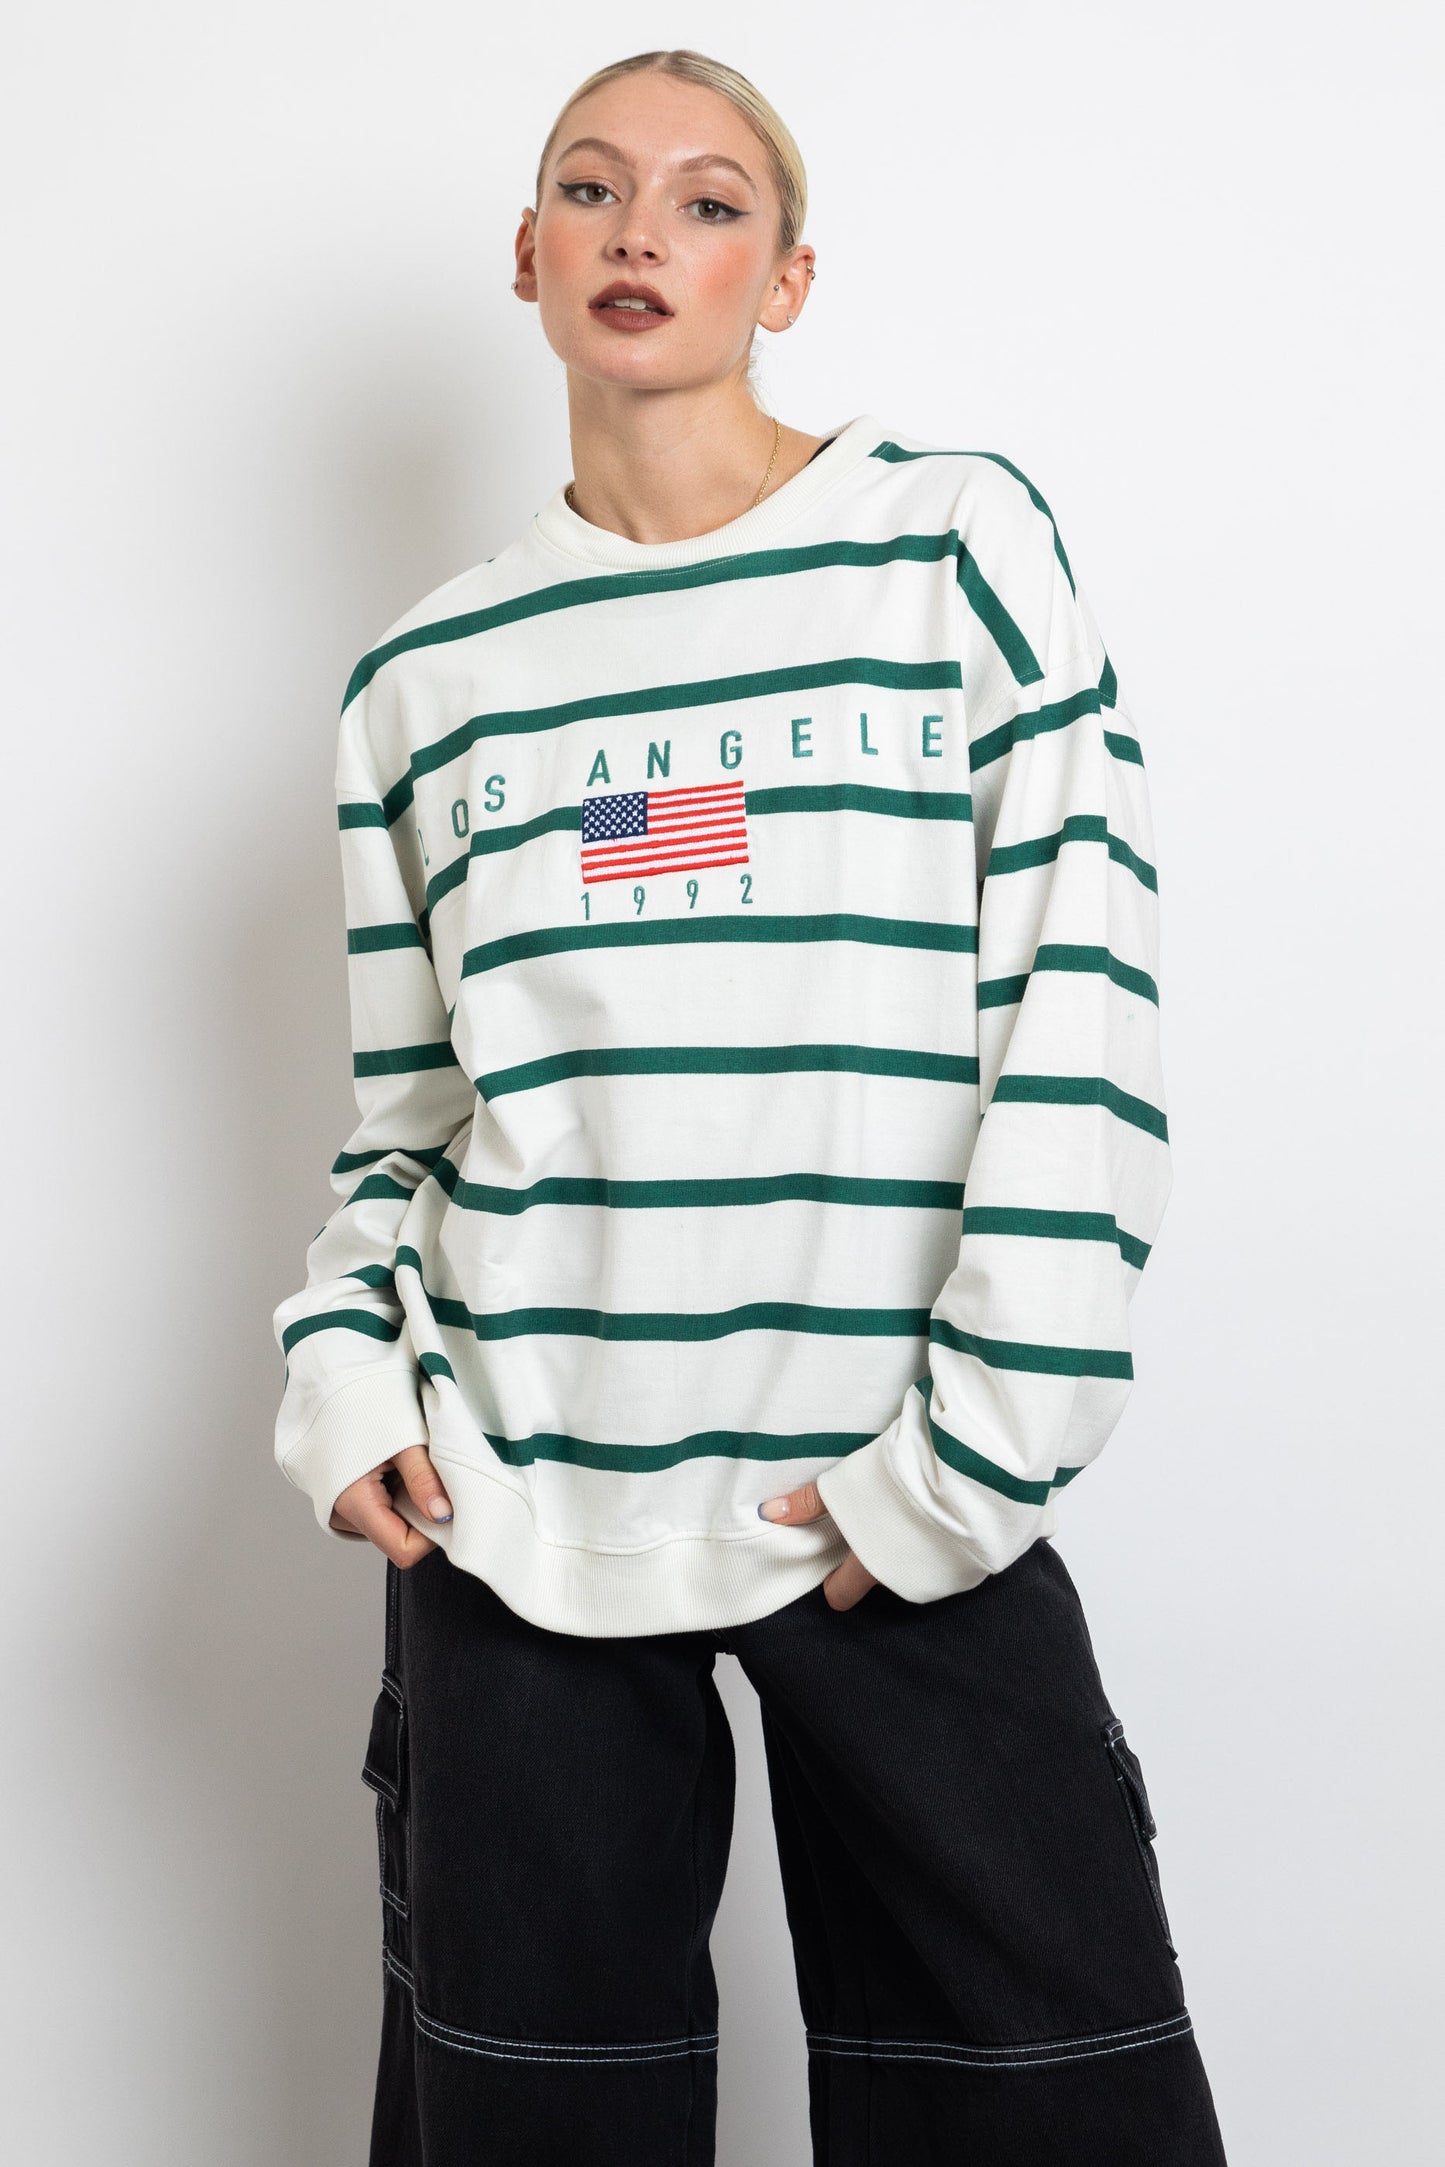 Daisy Street - White And Green Striped LA Sweater